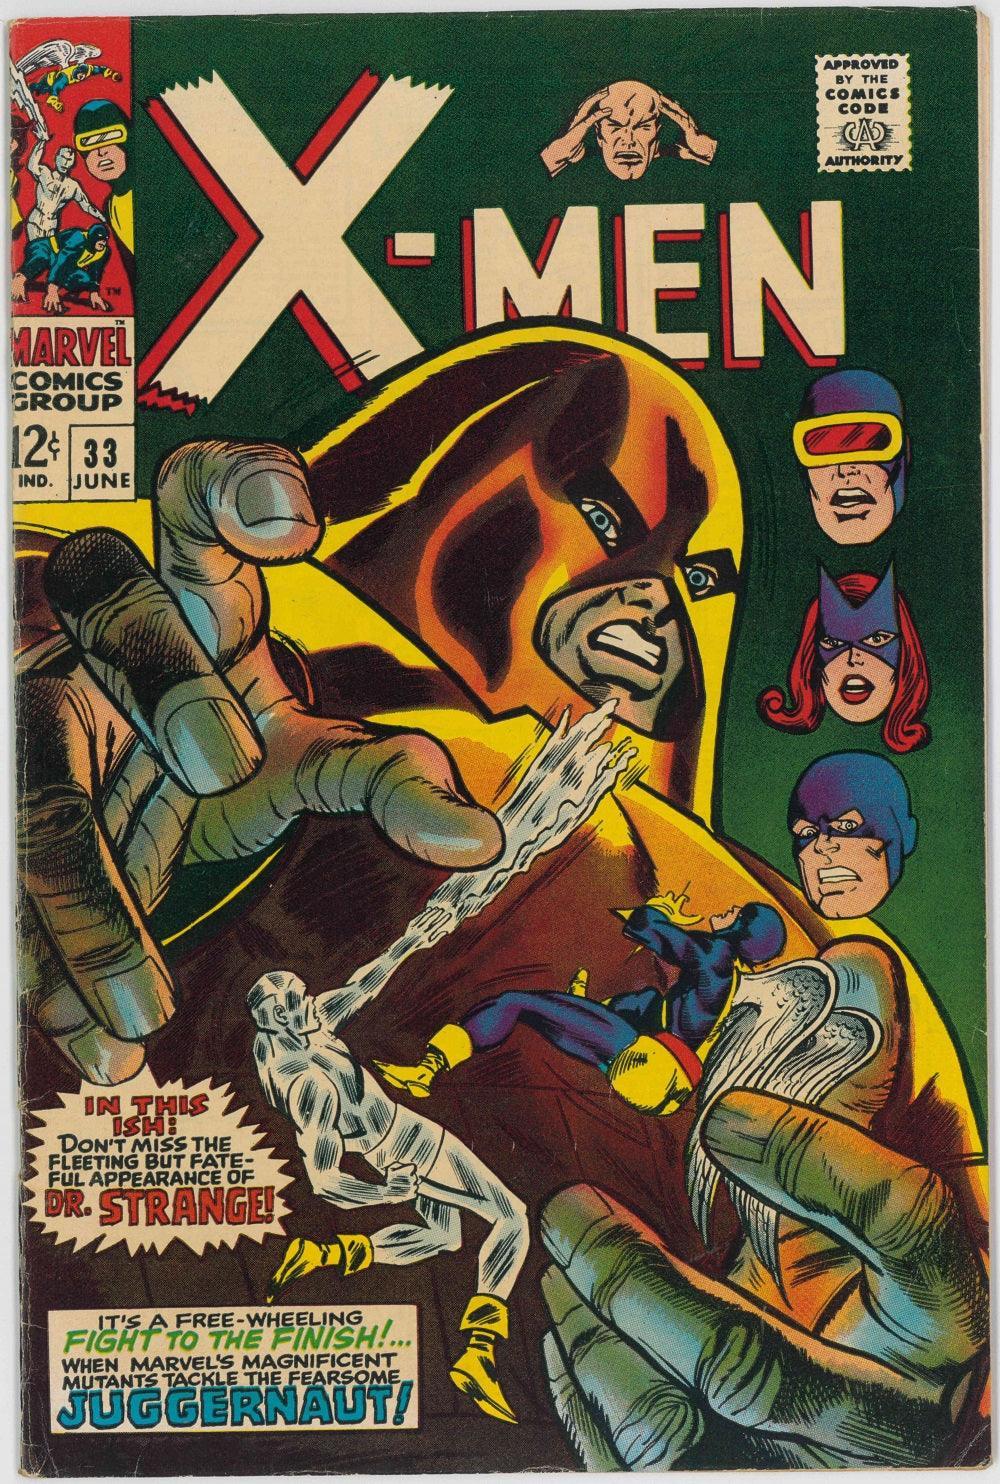 UNCANNY X-MEN (1963) #33 (FN/VF) - Kings Comics